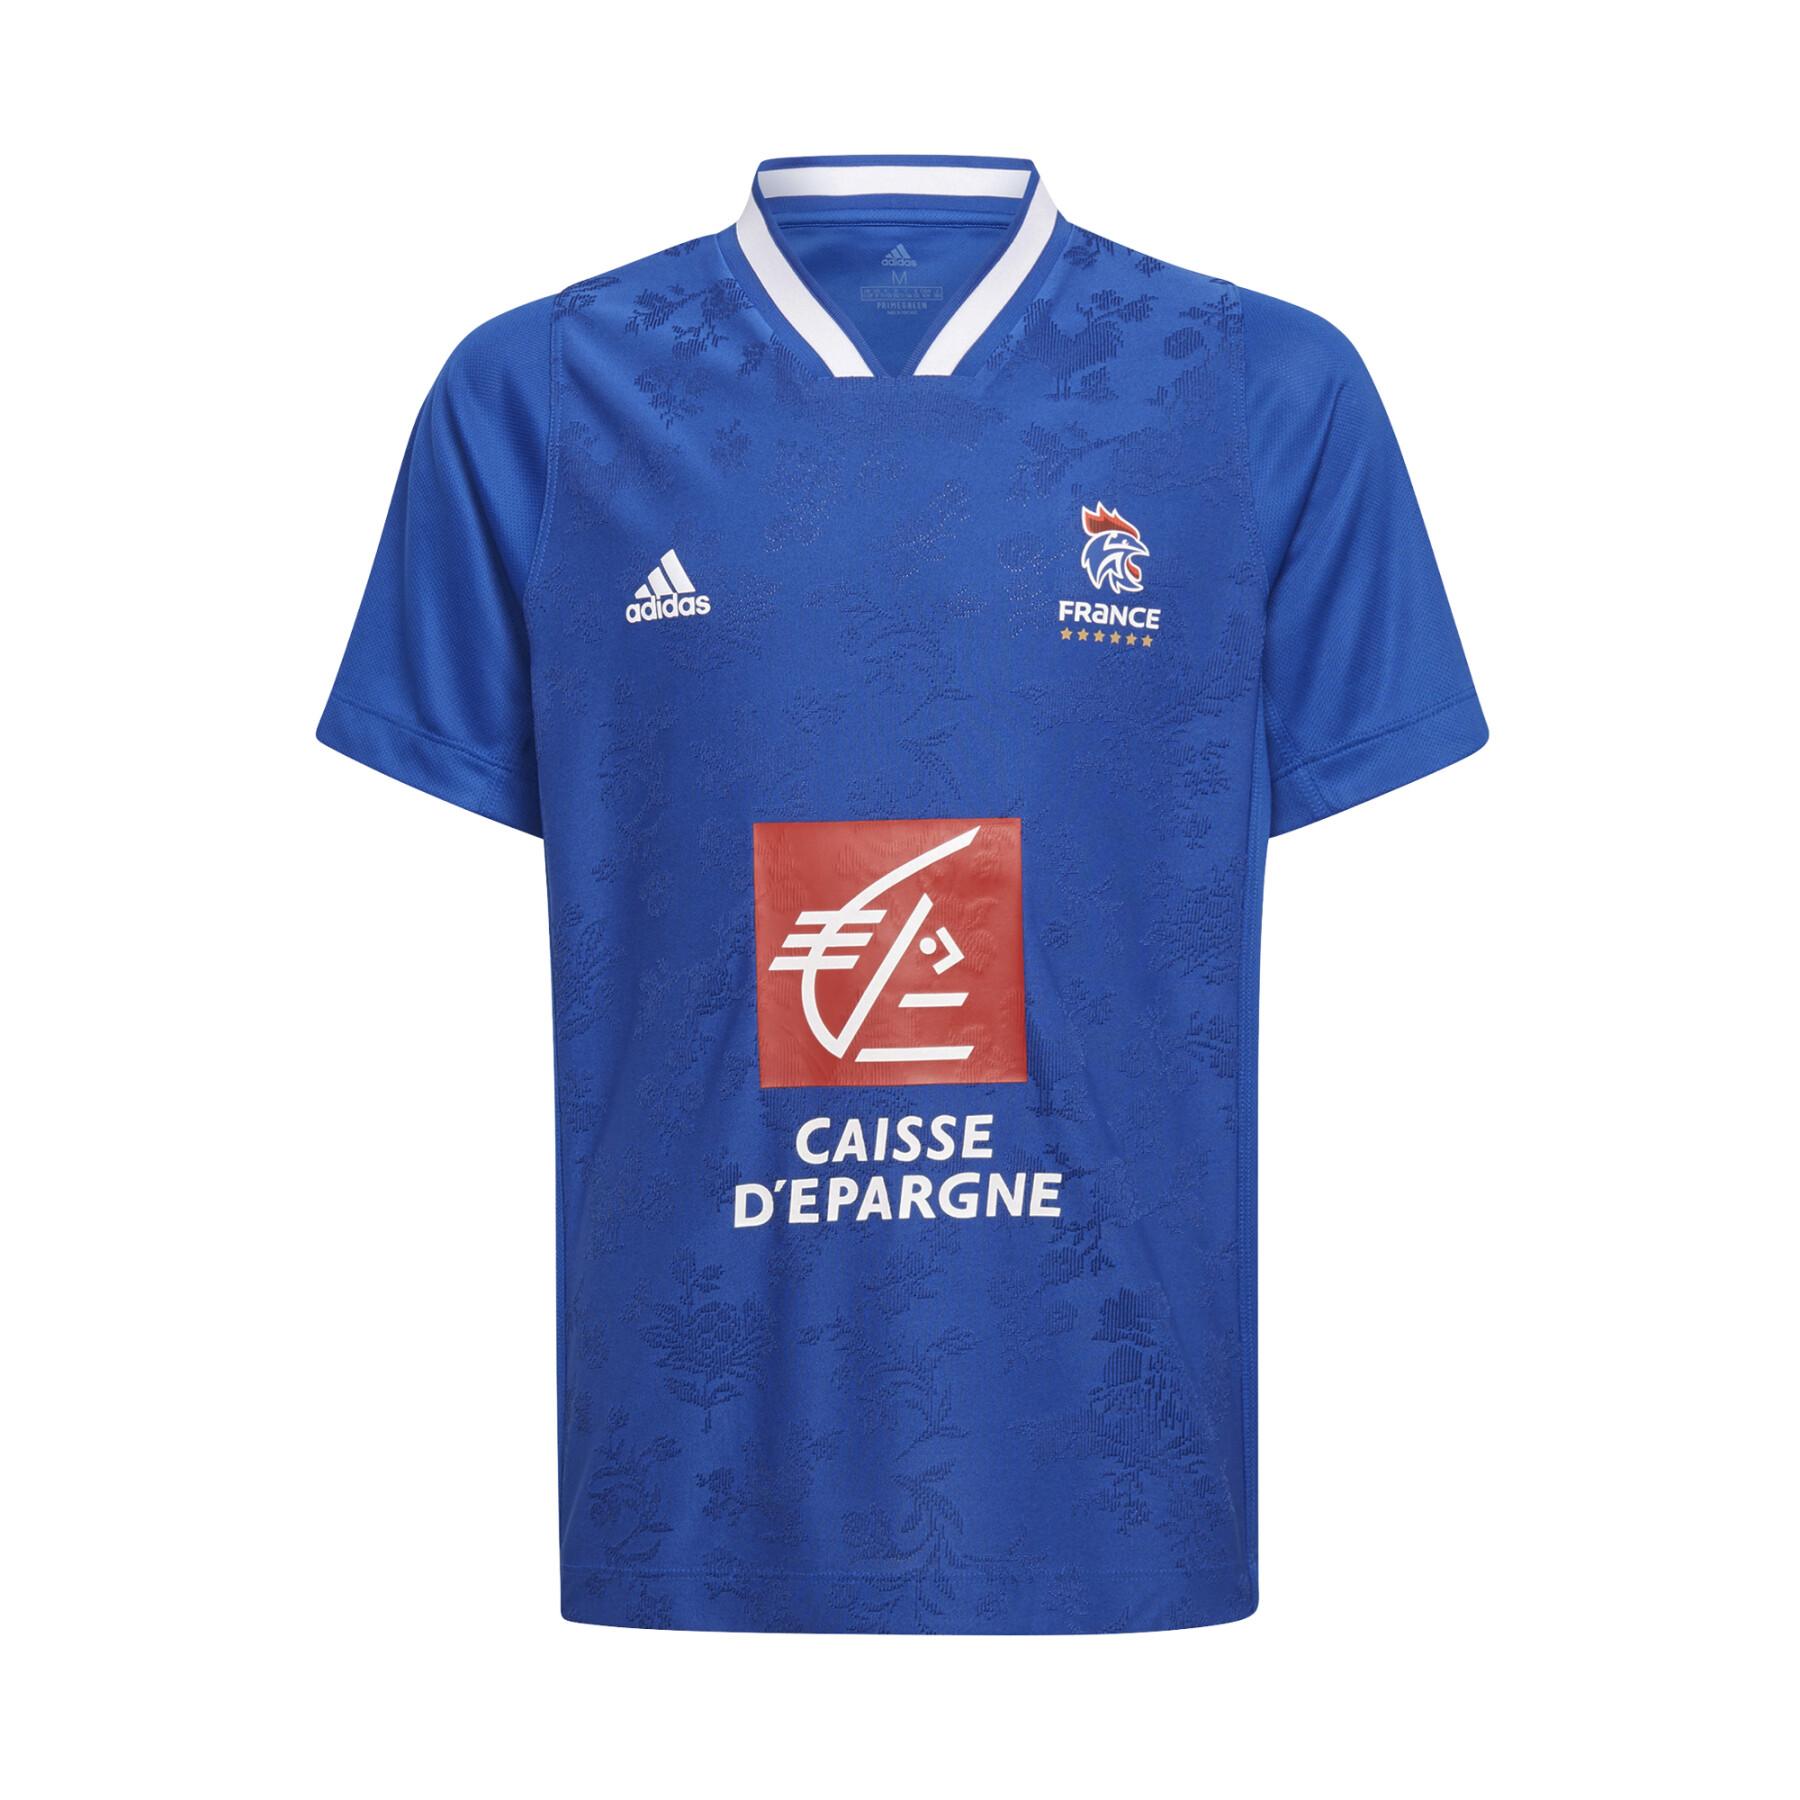 Dom dziecka jersey France 2021/22